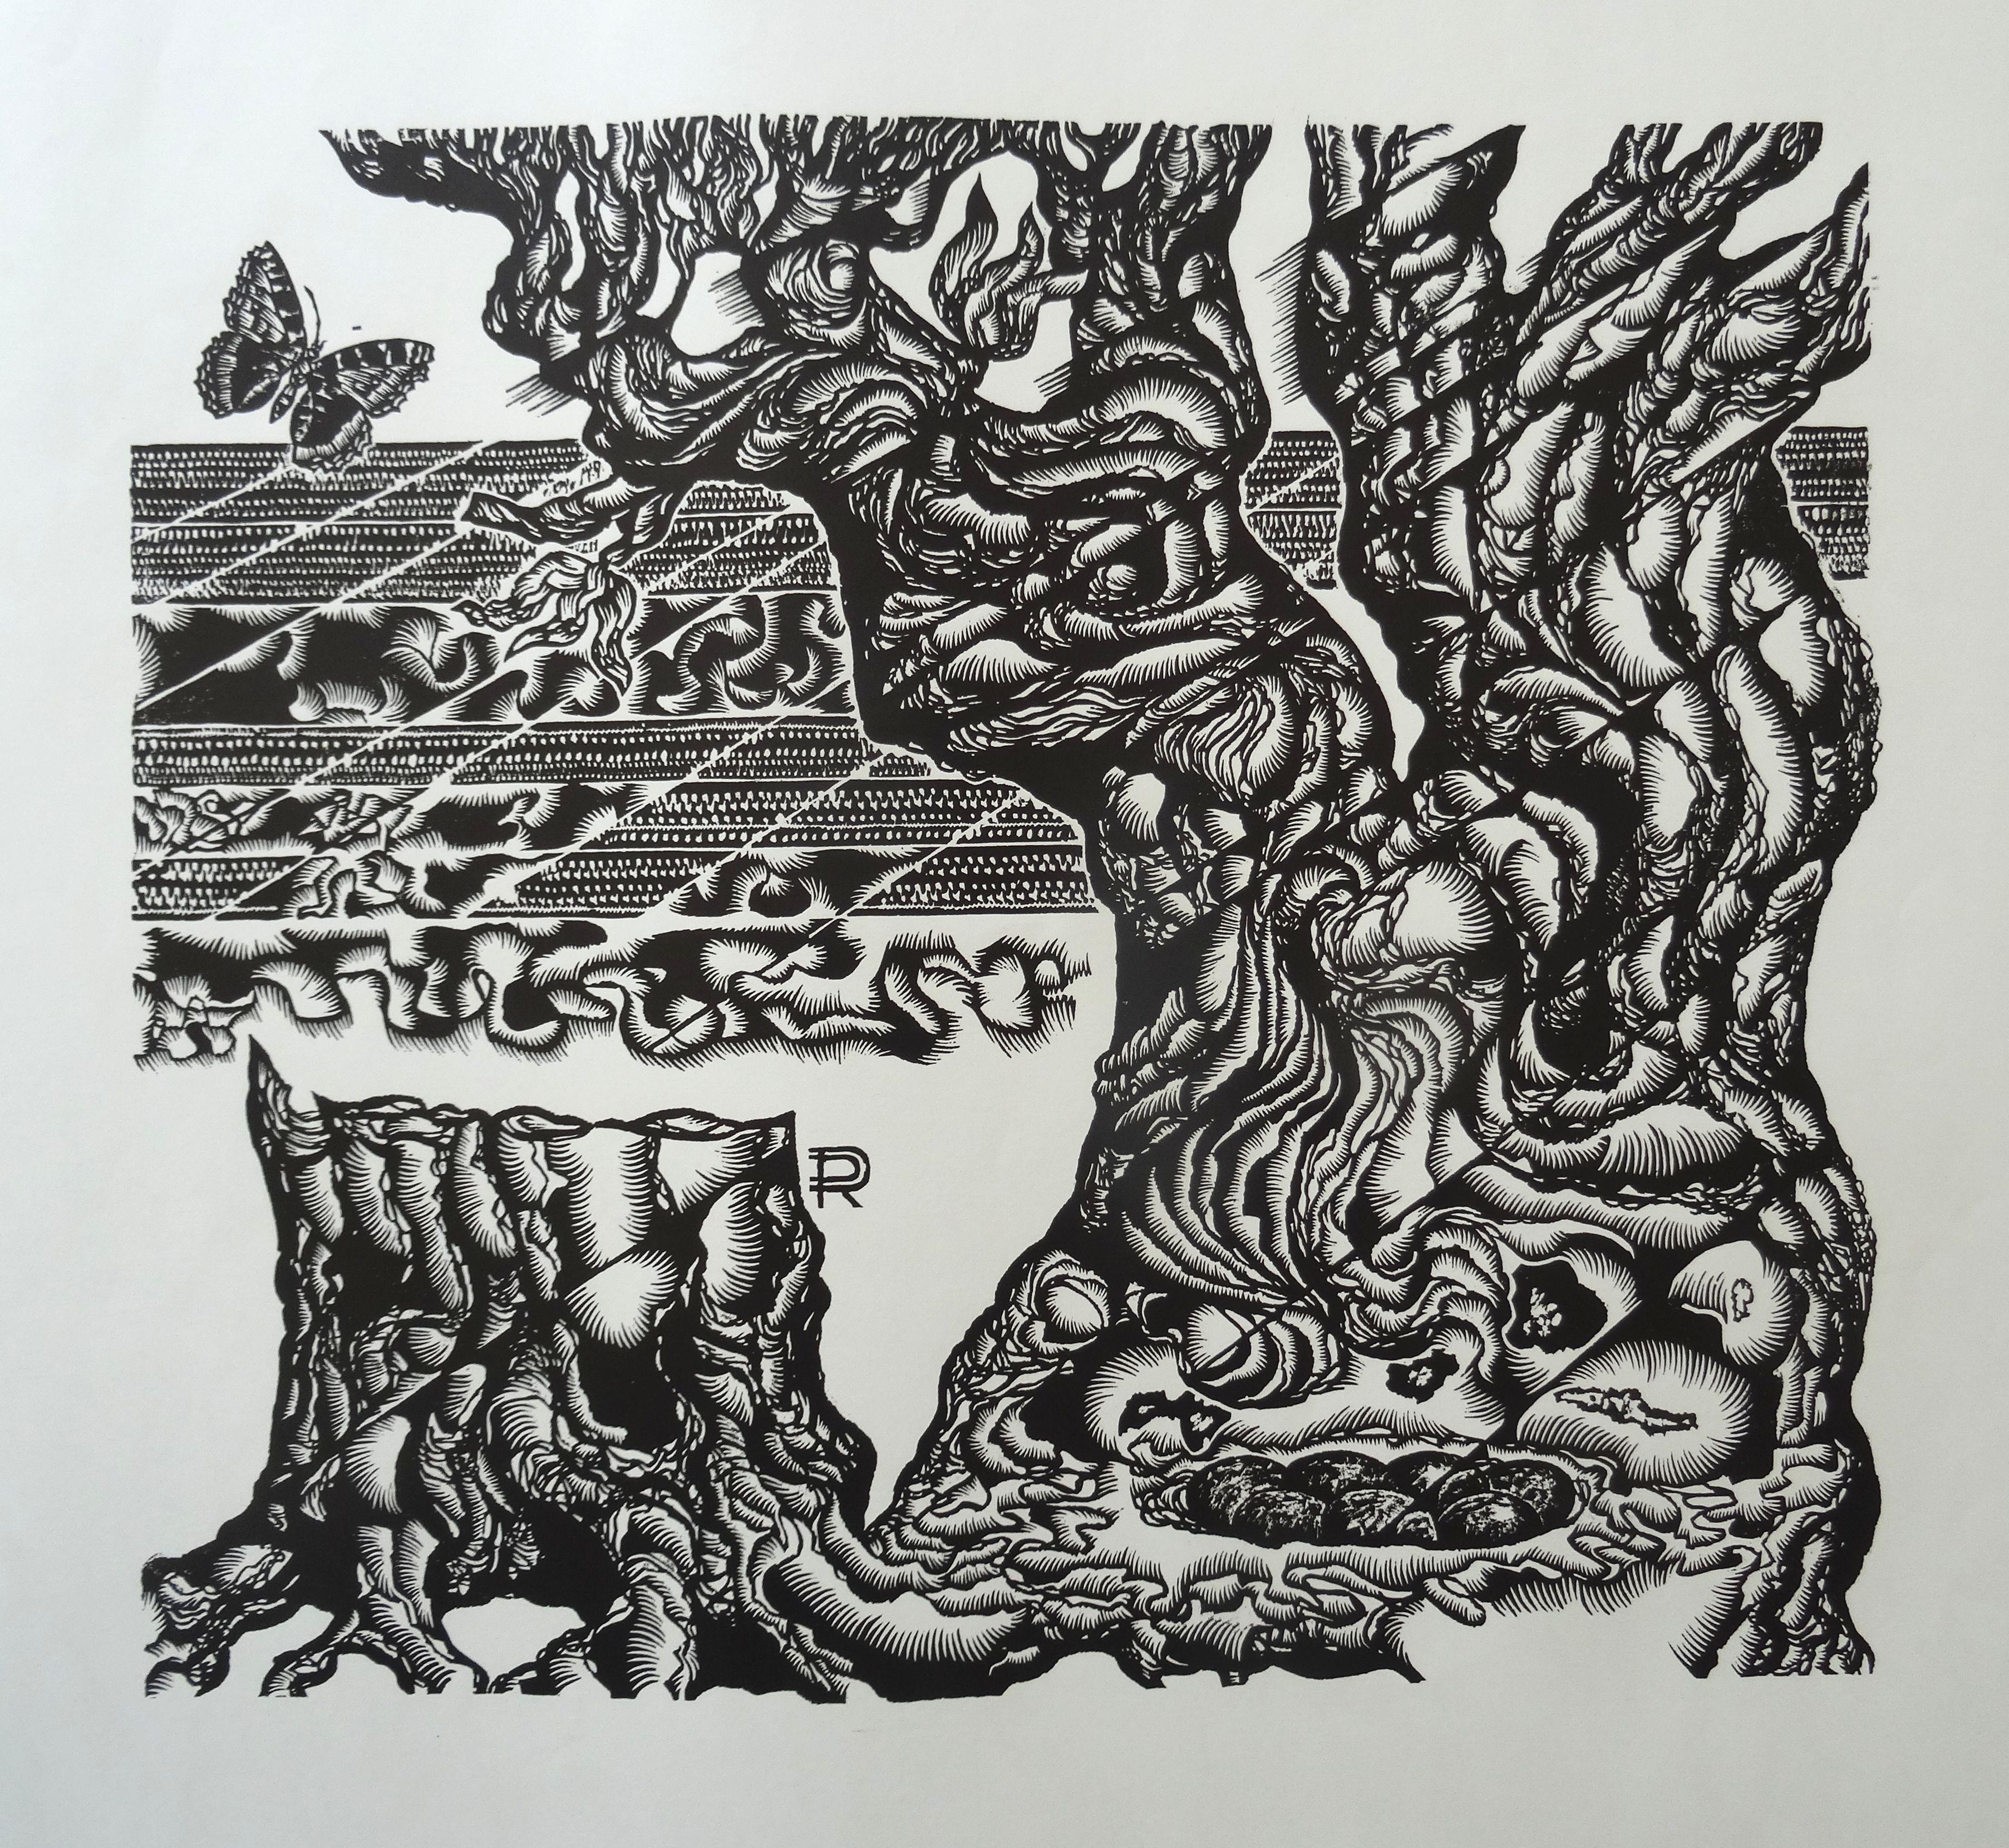 Baum des Lebens. 1982, Papier, Linolschnitt, Druckgröße 50x56 cm; insgesamt 60x65 cm